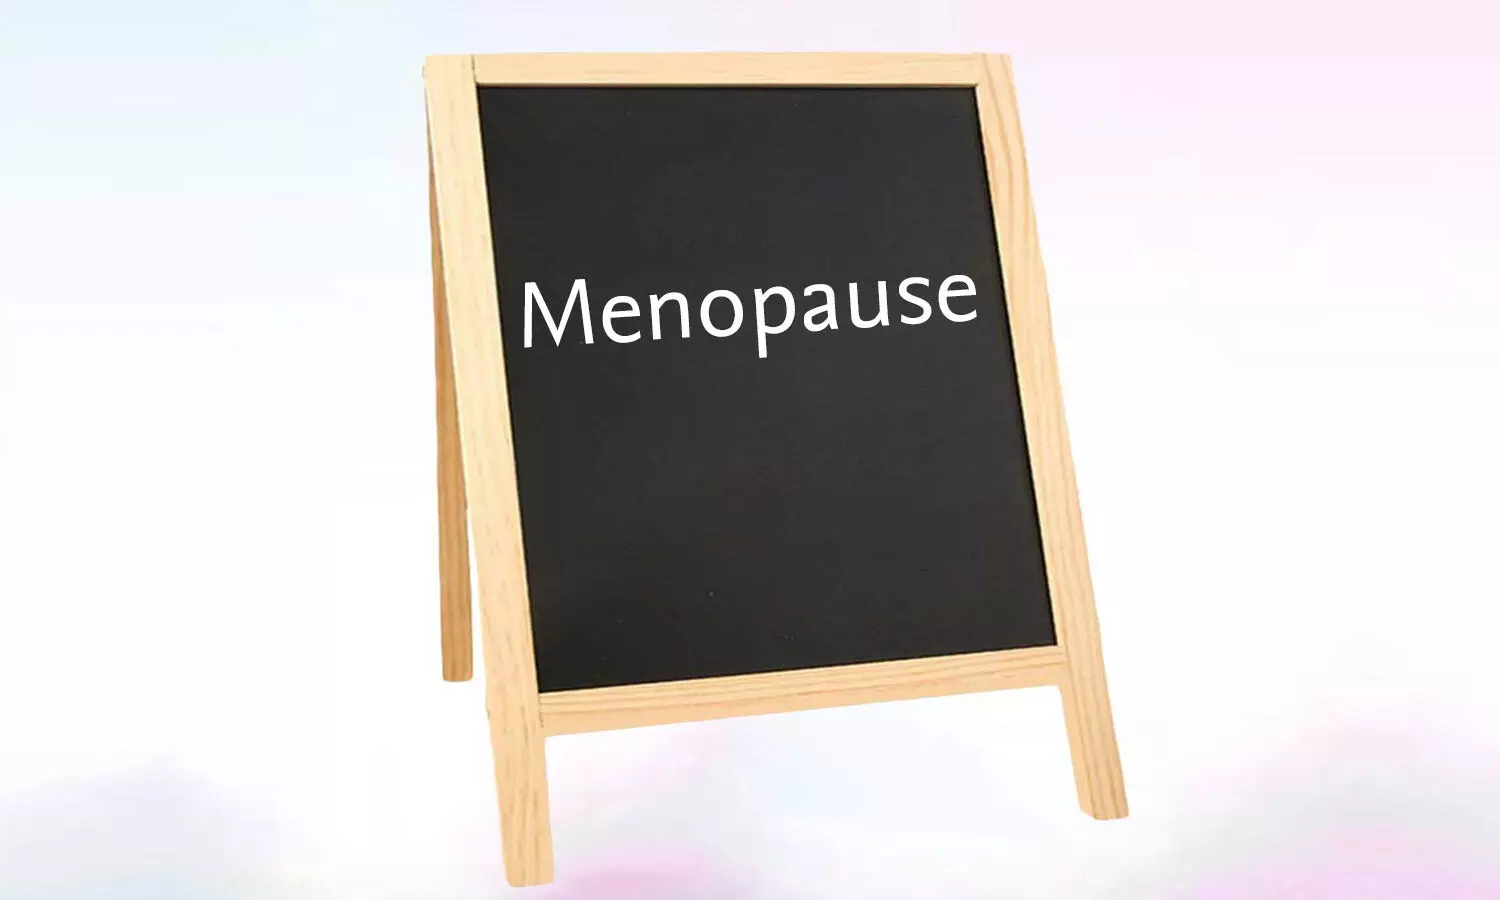 Higher numbers of menopausal symptoms tied to lower work performance in women: Study